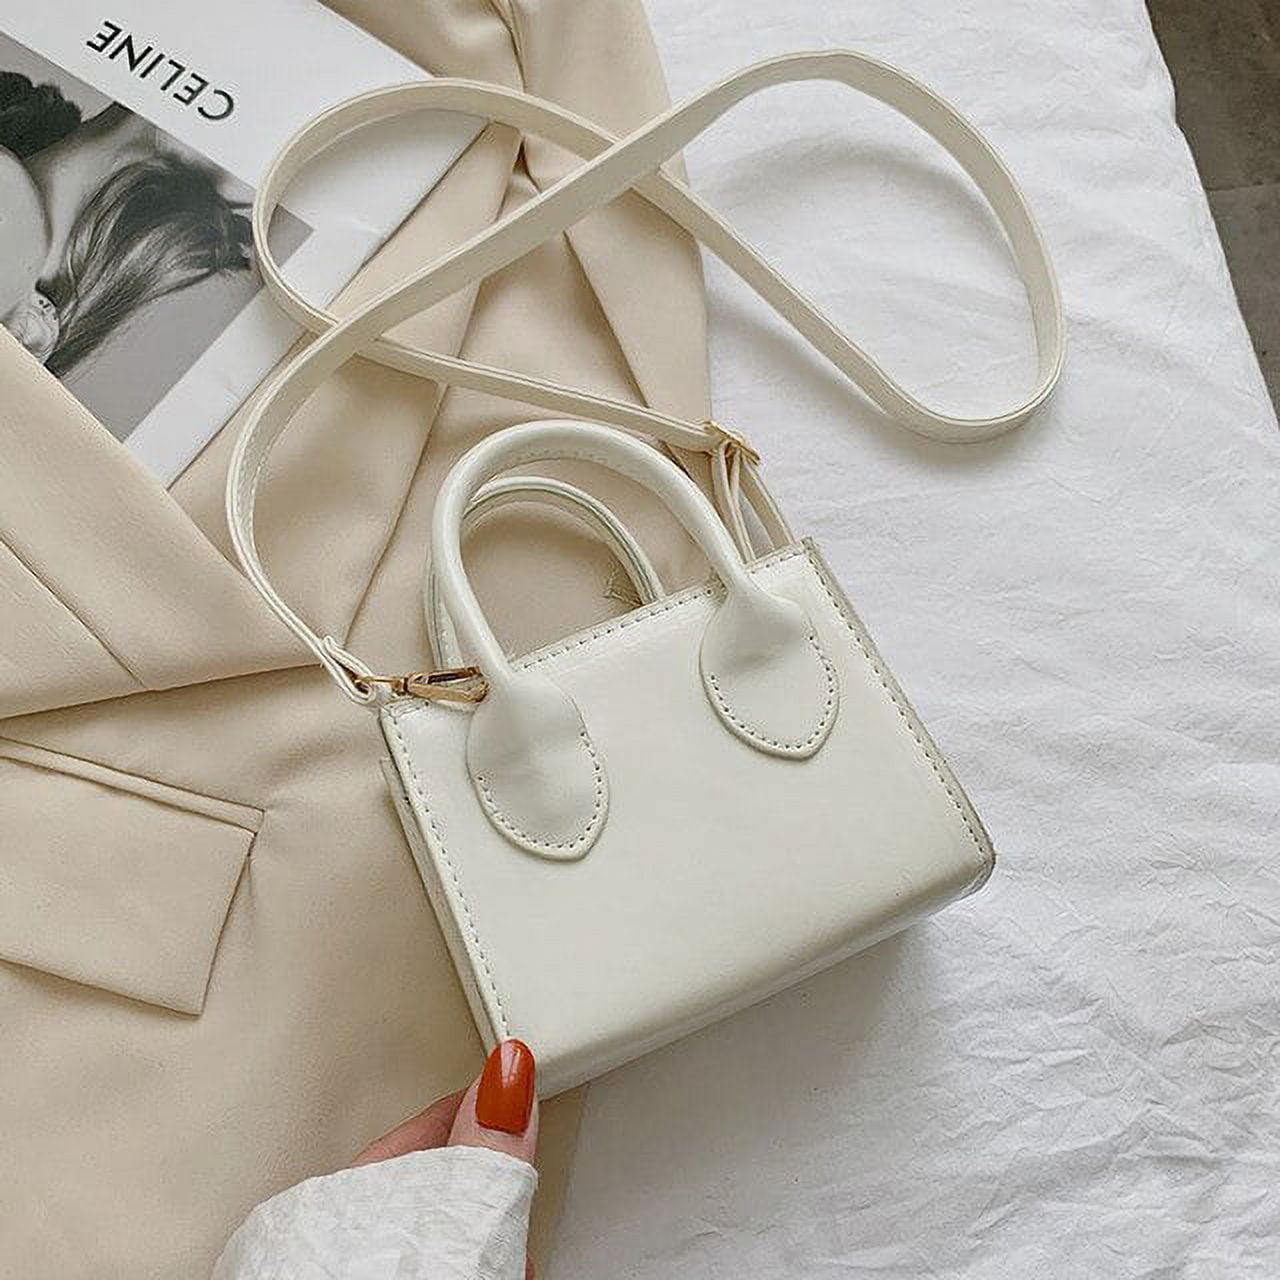 Fendi Baguette Handbag - Multi Lining - All High Quality Luxury Brands  Copies | Fendi, Fendi bags, Fendi baguette